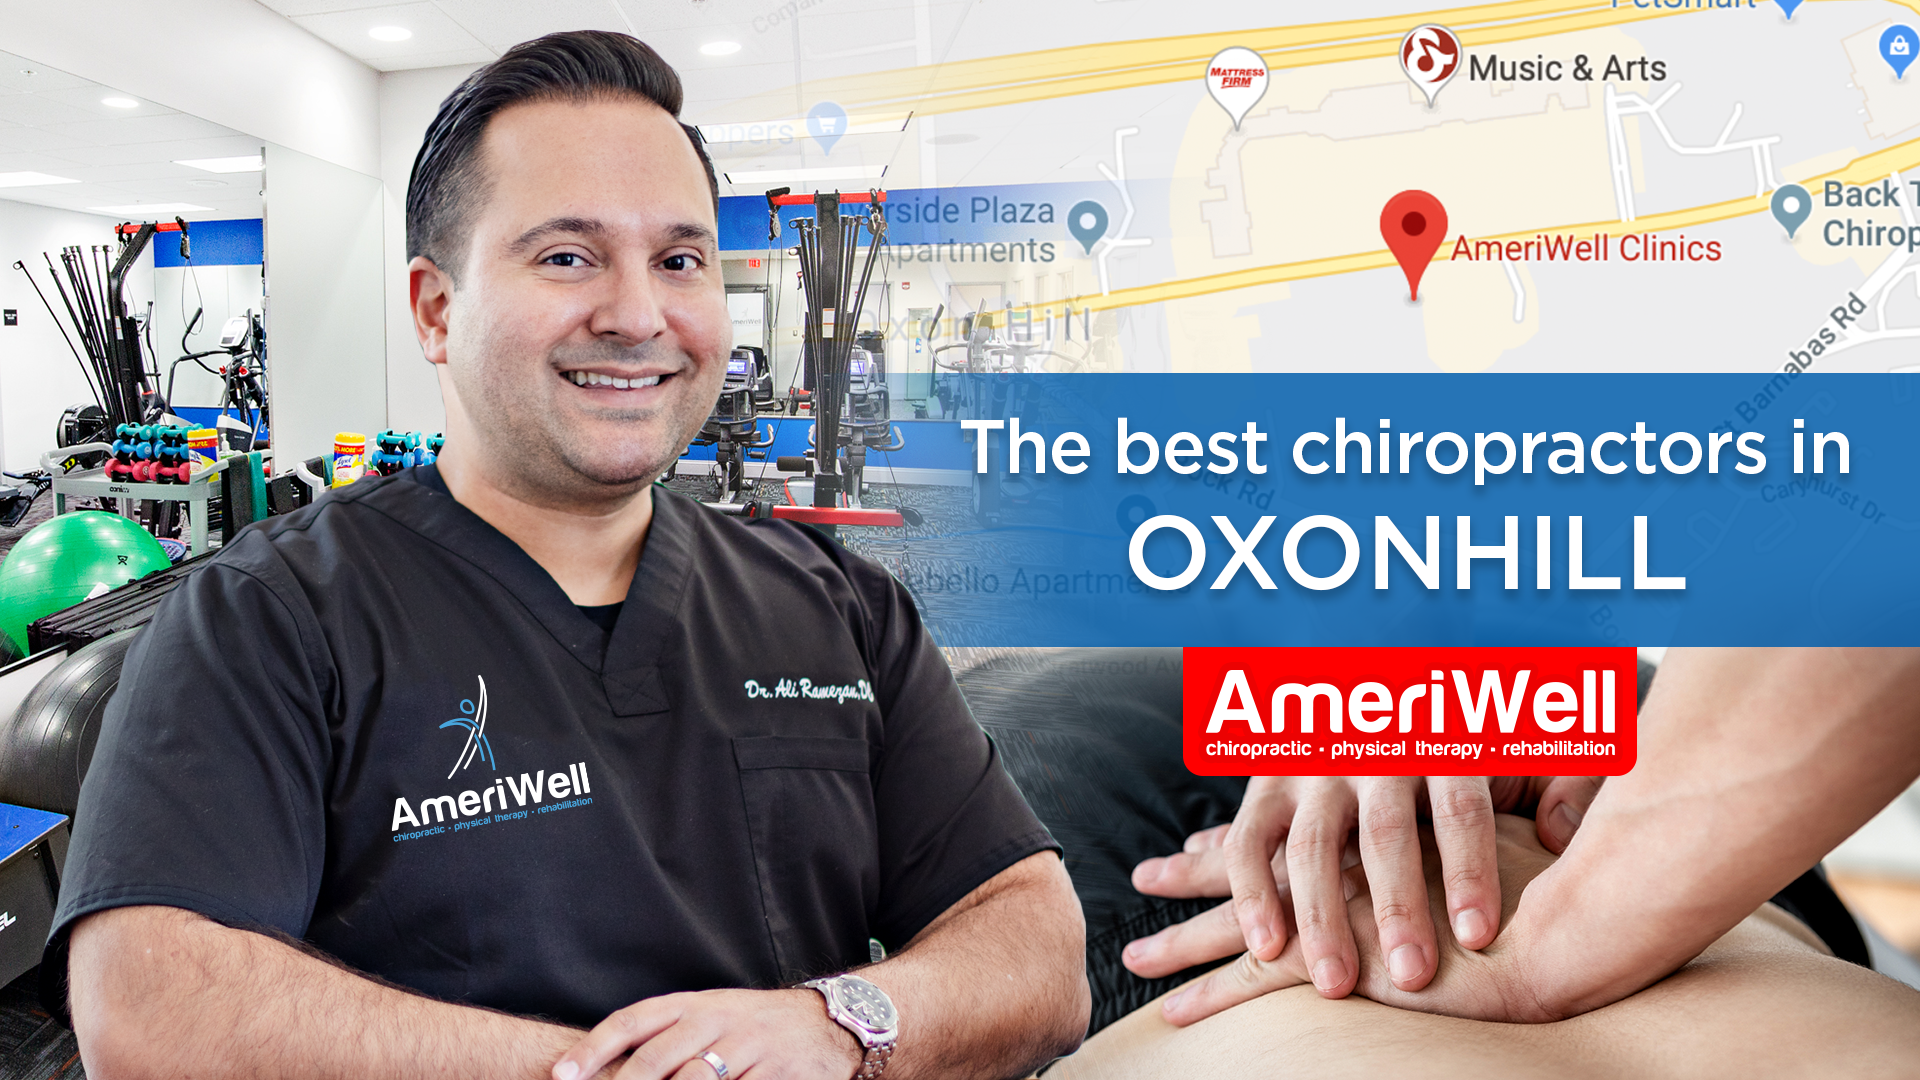 Oxon Hill - Ameriwell Clinics the best chiropractors